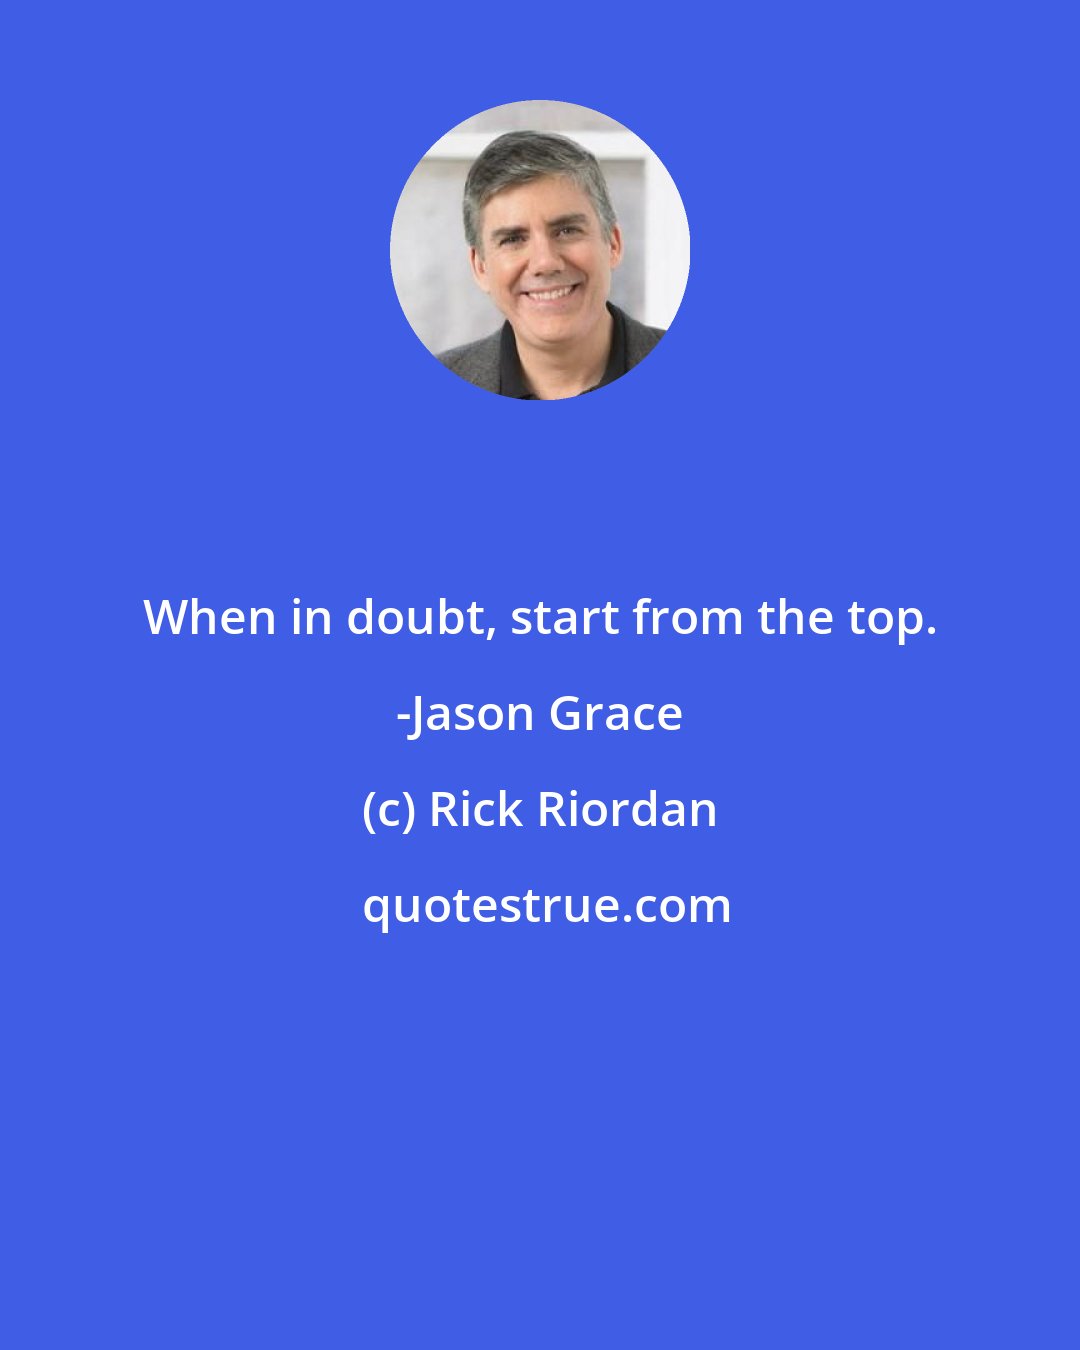 Rick Riordan: When in doubt, start from the top. -Jason Grace